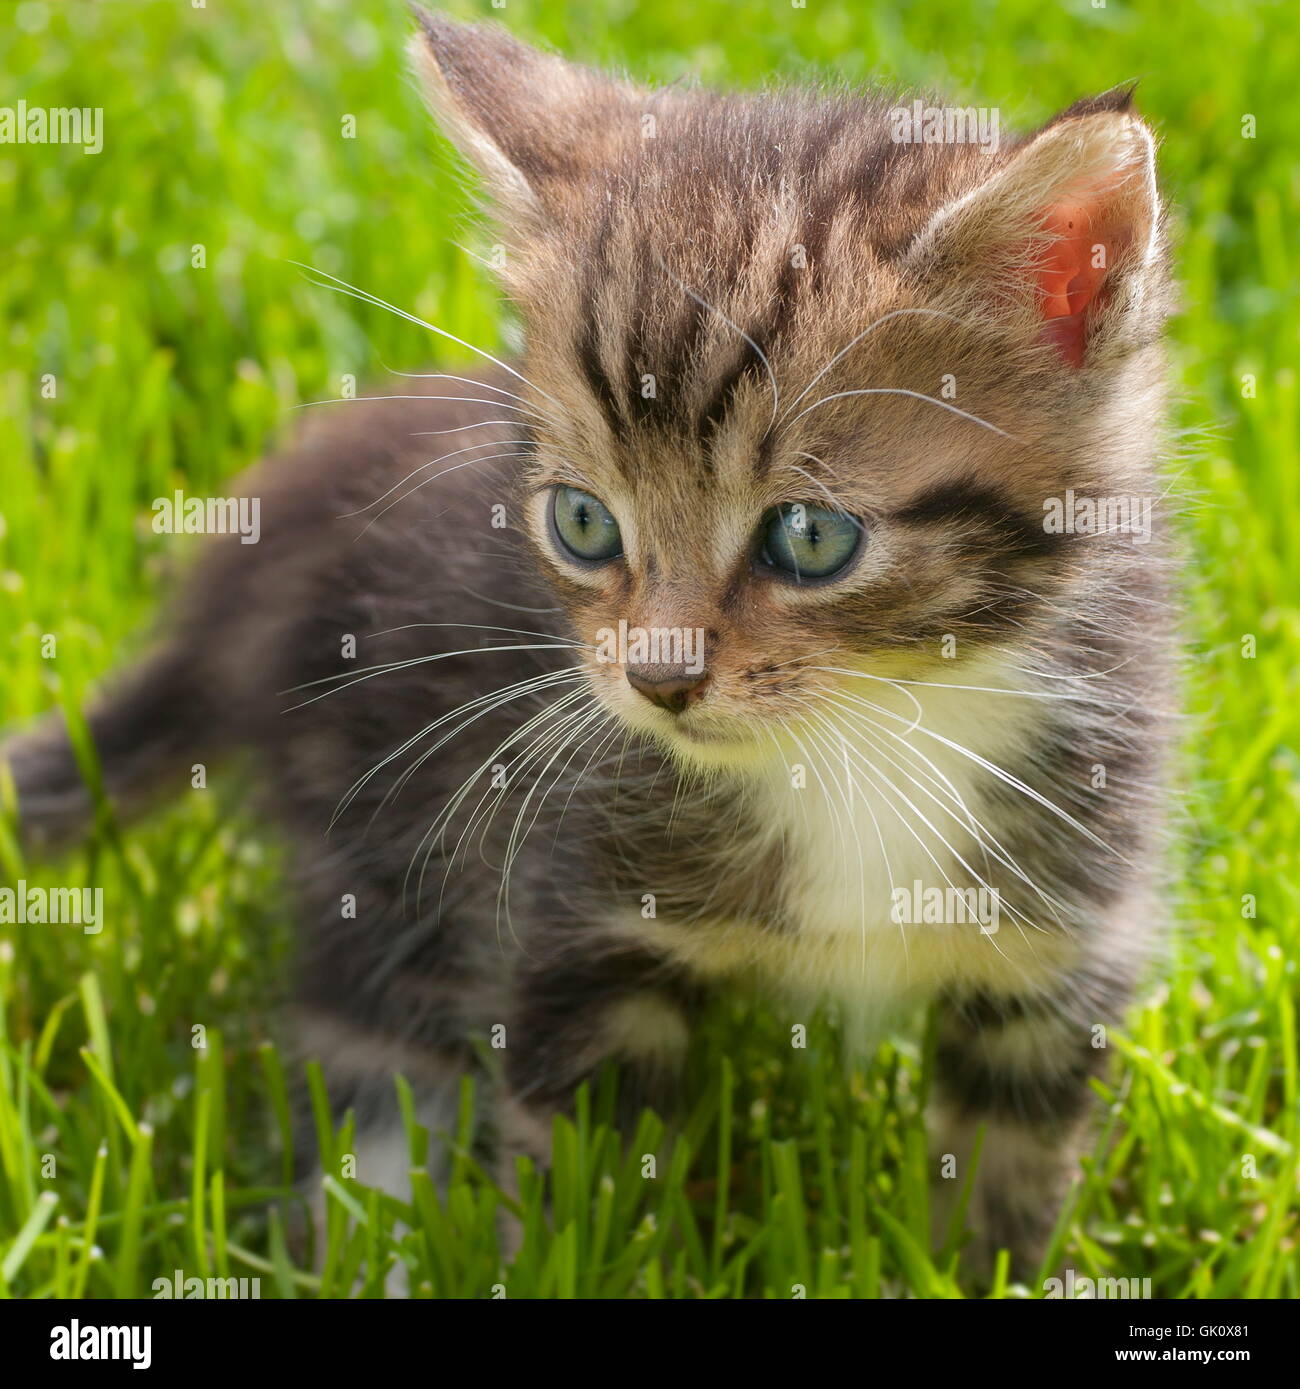 kitten in the grass Stock Photo